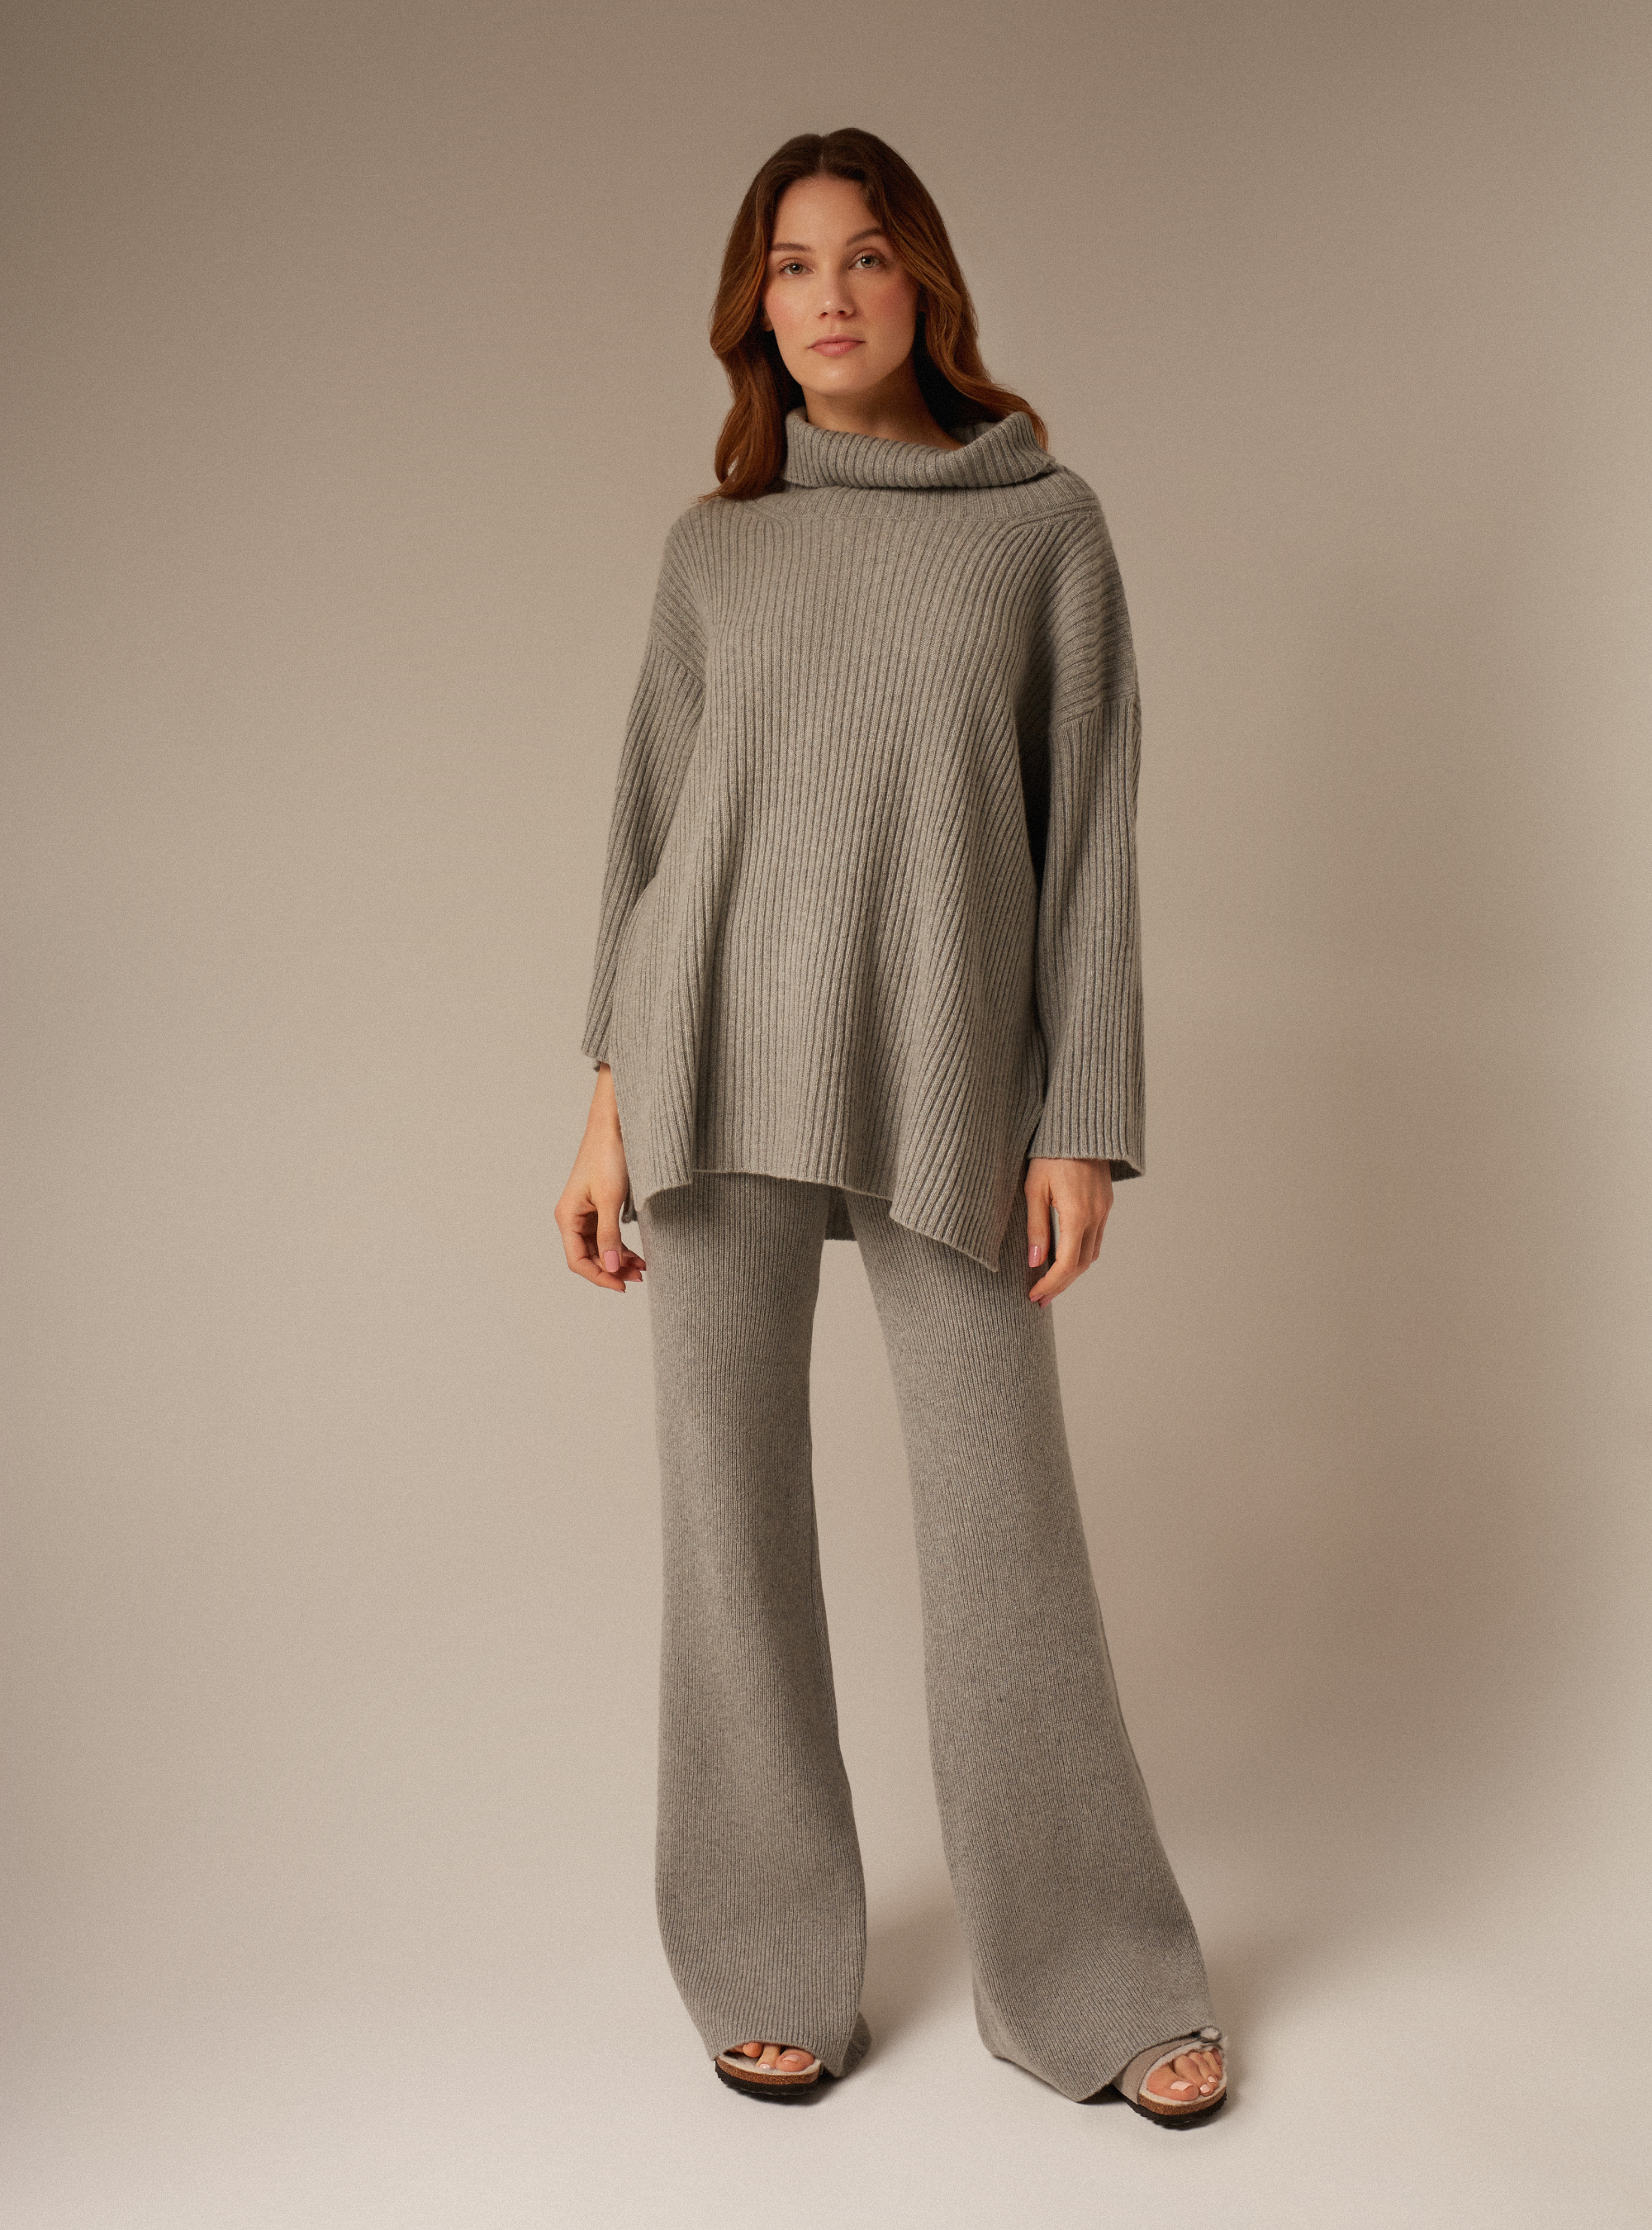 Women's oversized turtleneck side slit Sweater Grey